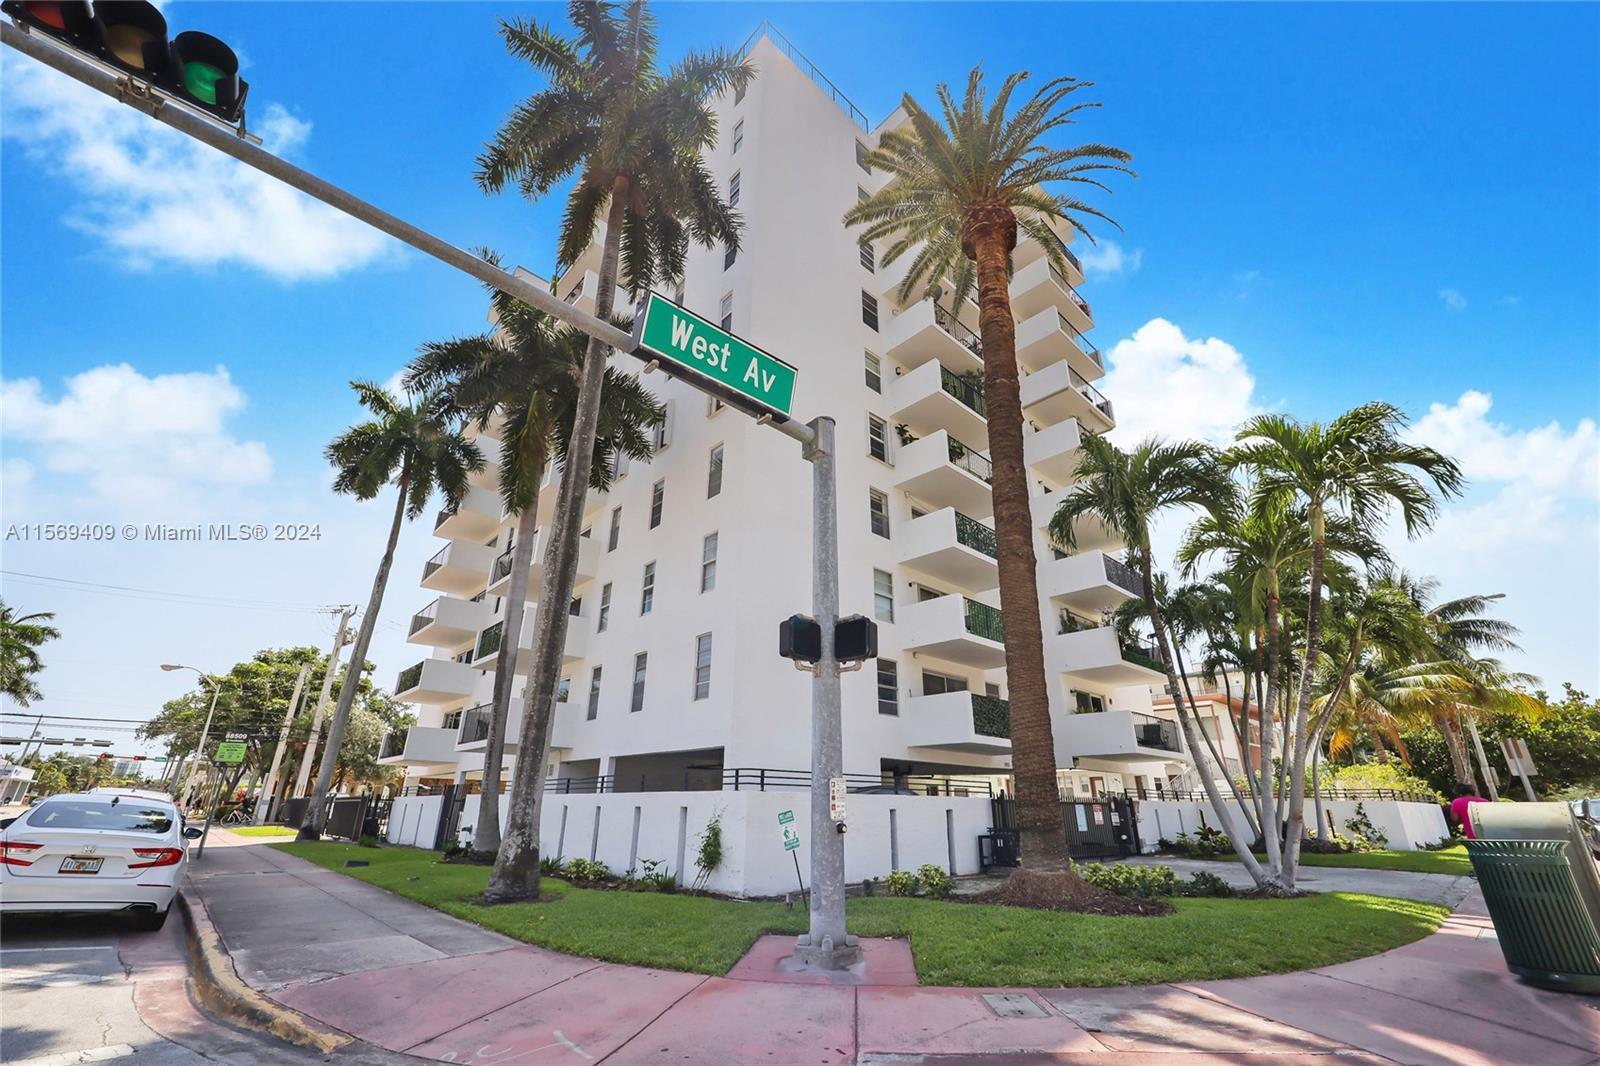 Photo of 1455 West Ave #502 in Miami Beach, FL